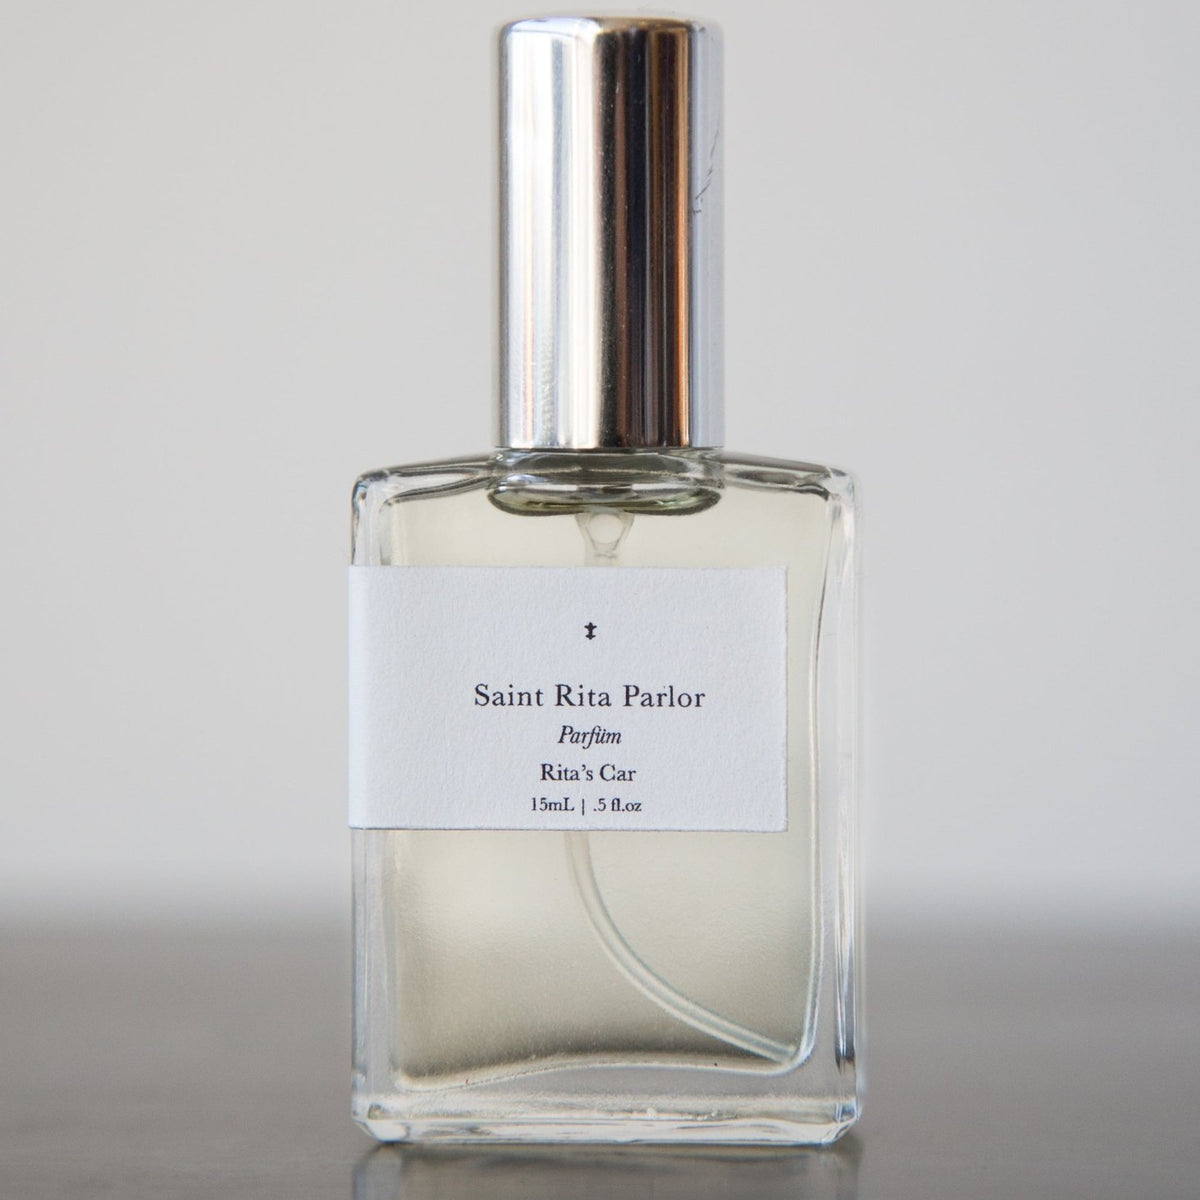 Parfum, Rita's Car Fragrance